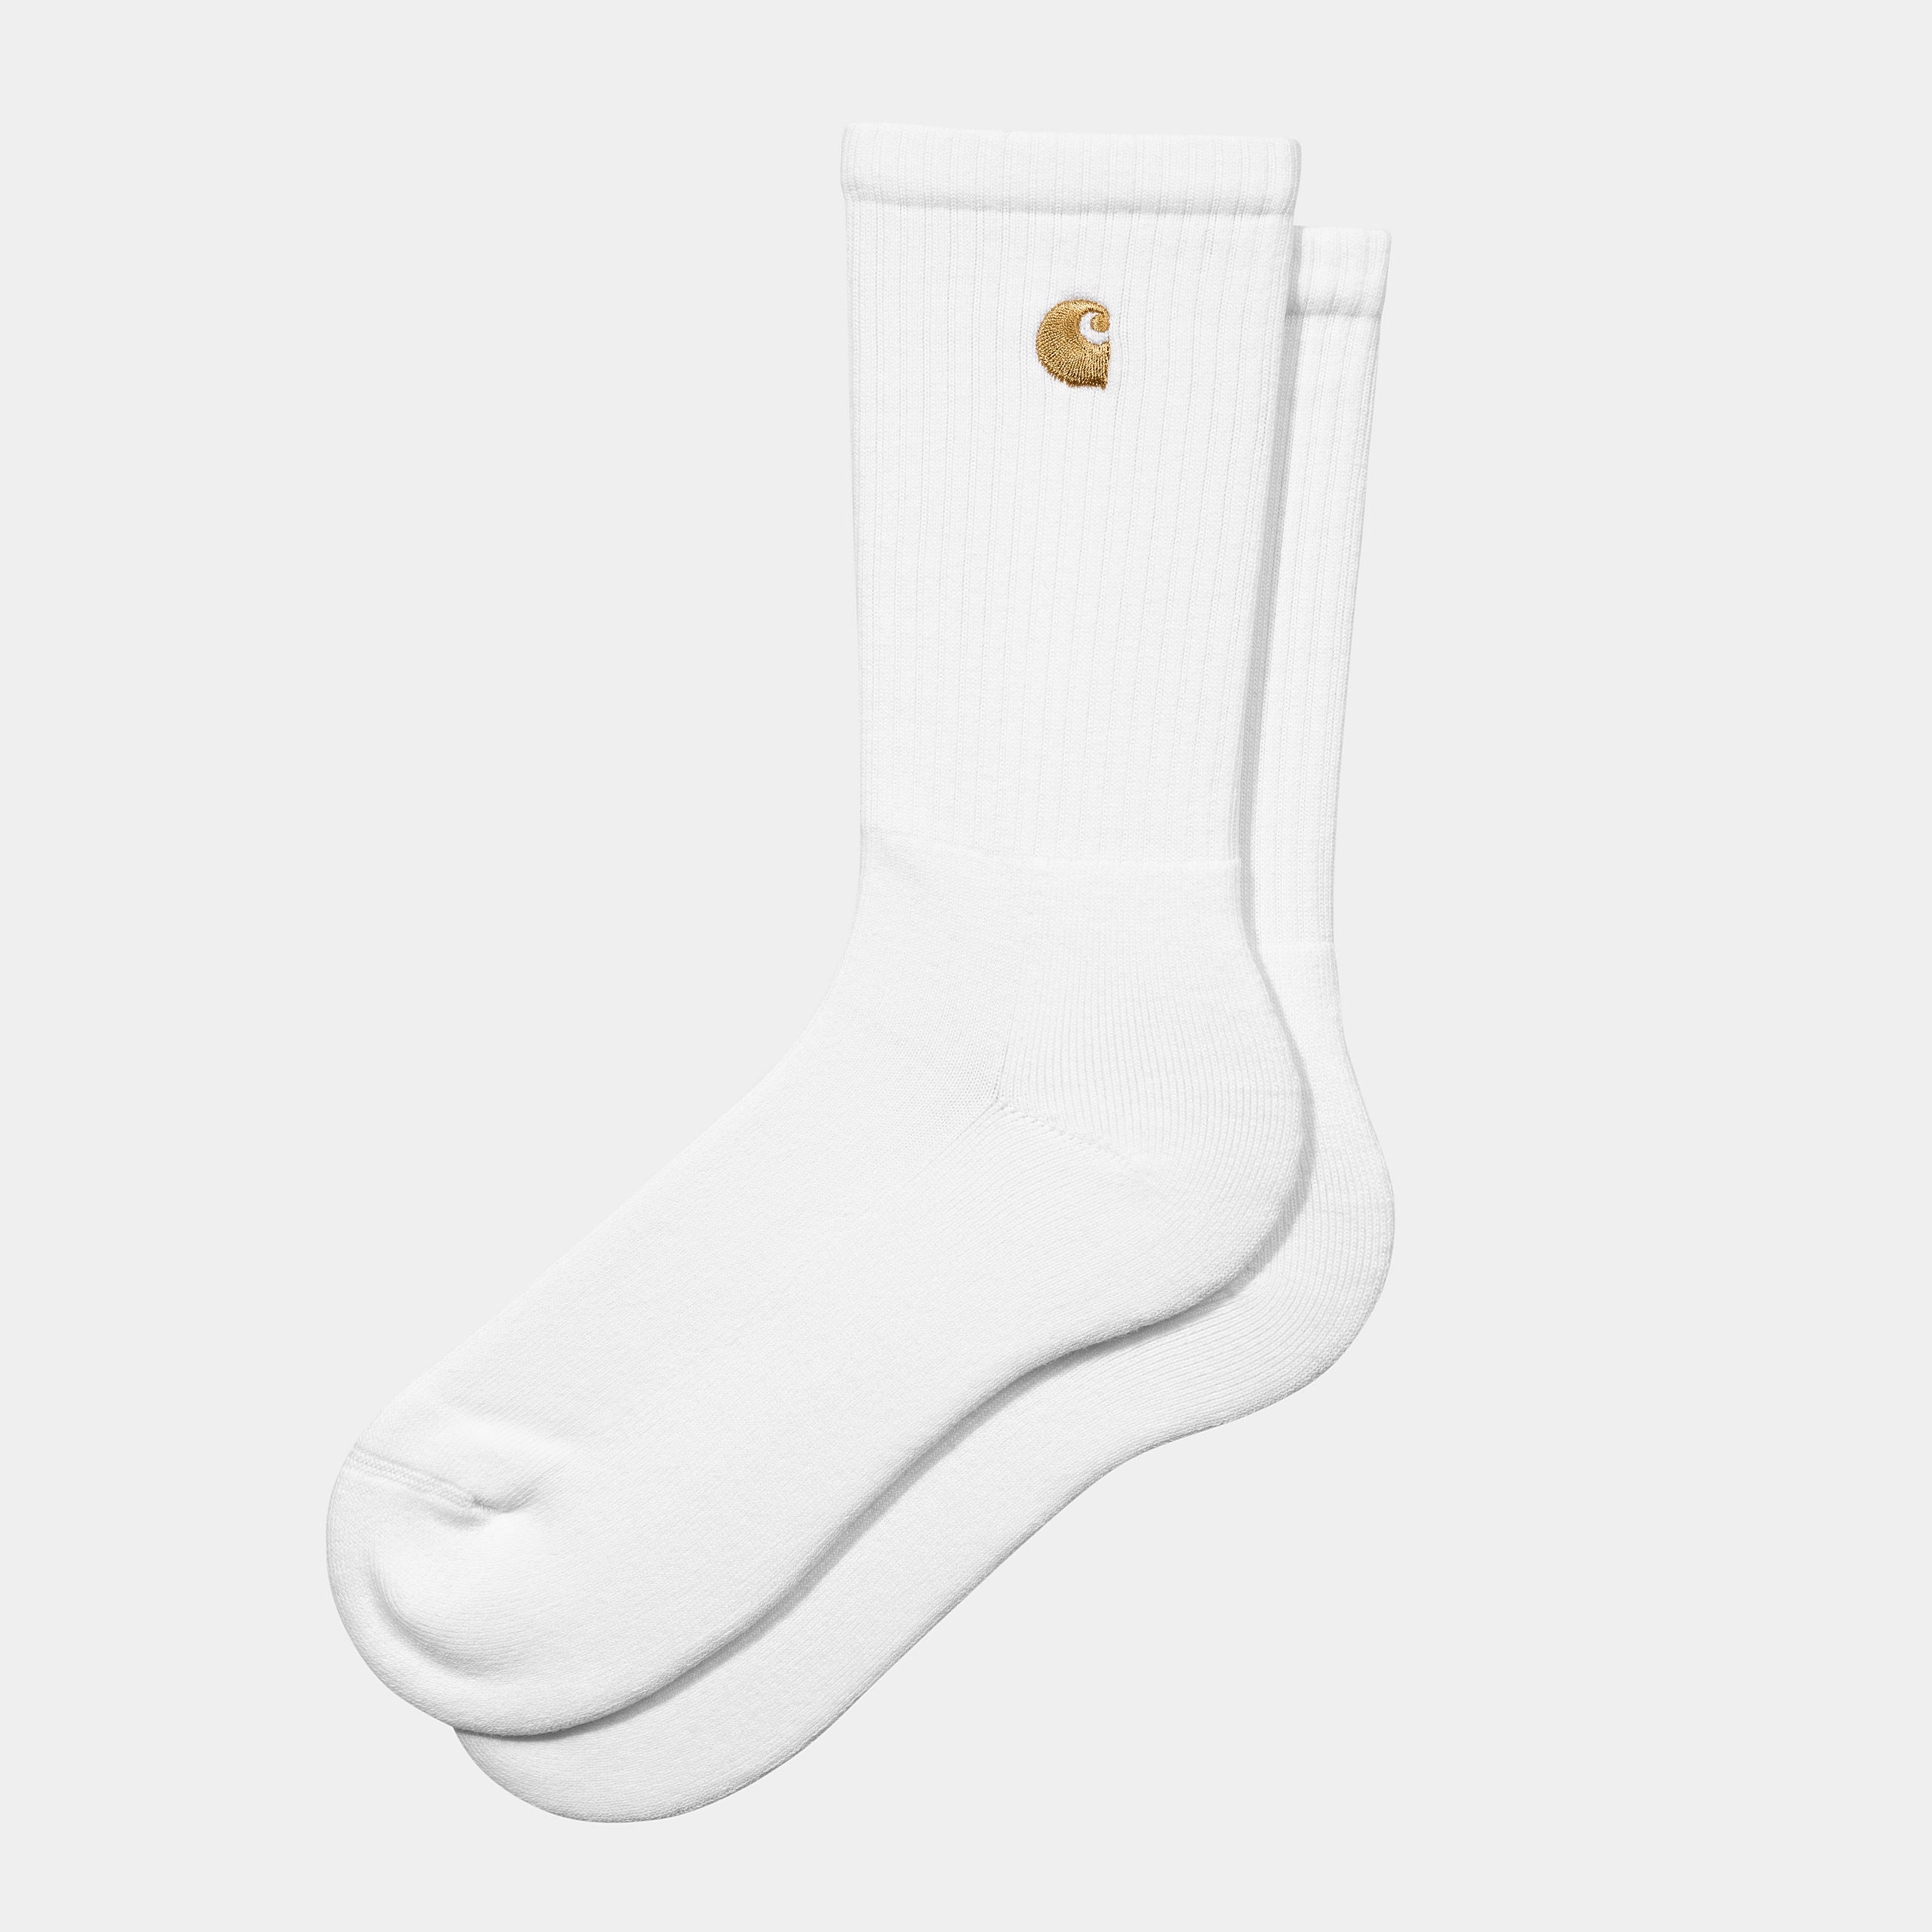 Men's Chase Socks-White / Gold-Front View